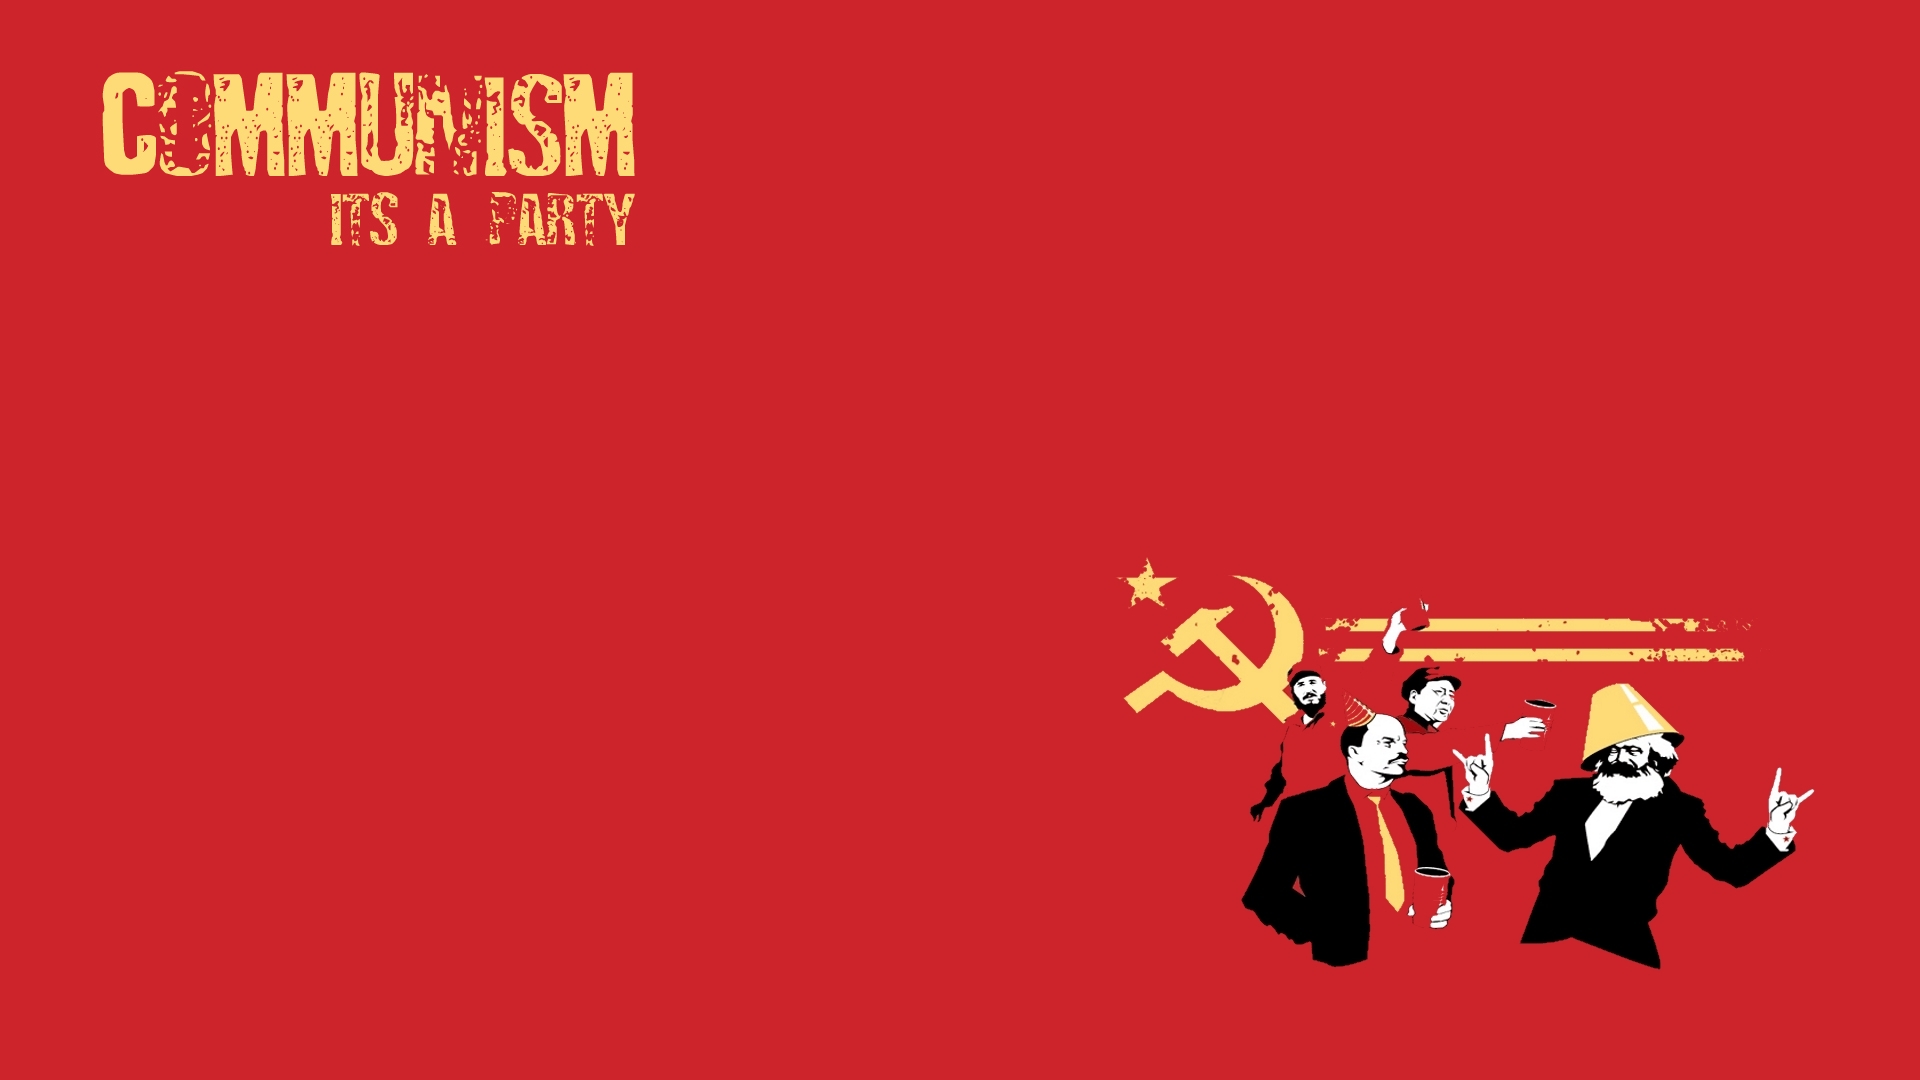 Communist Party - 1920x1080 Wallpaper 